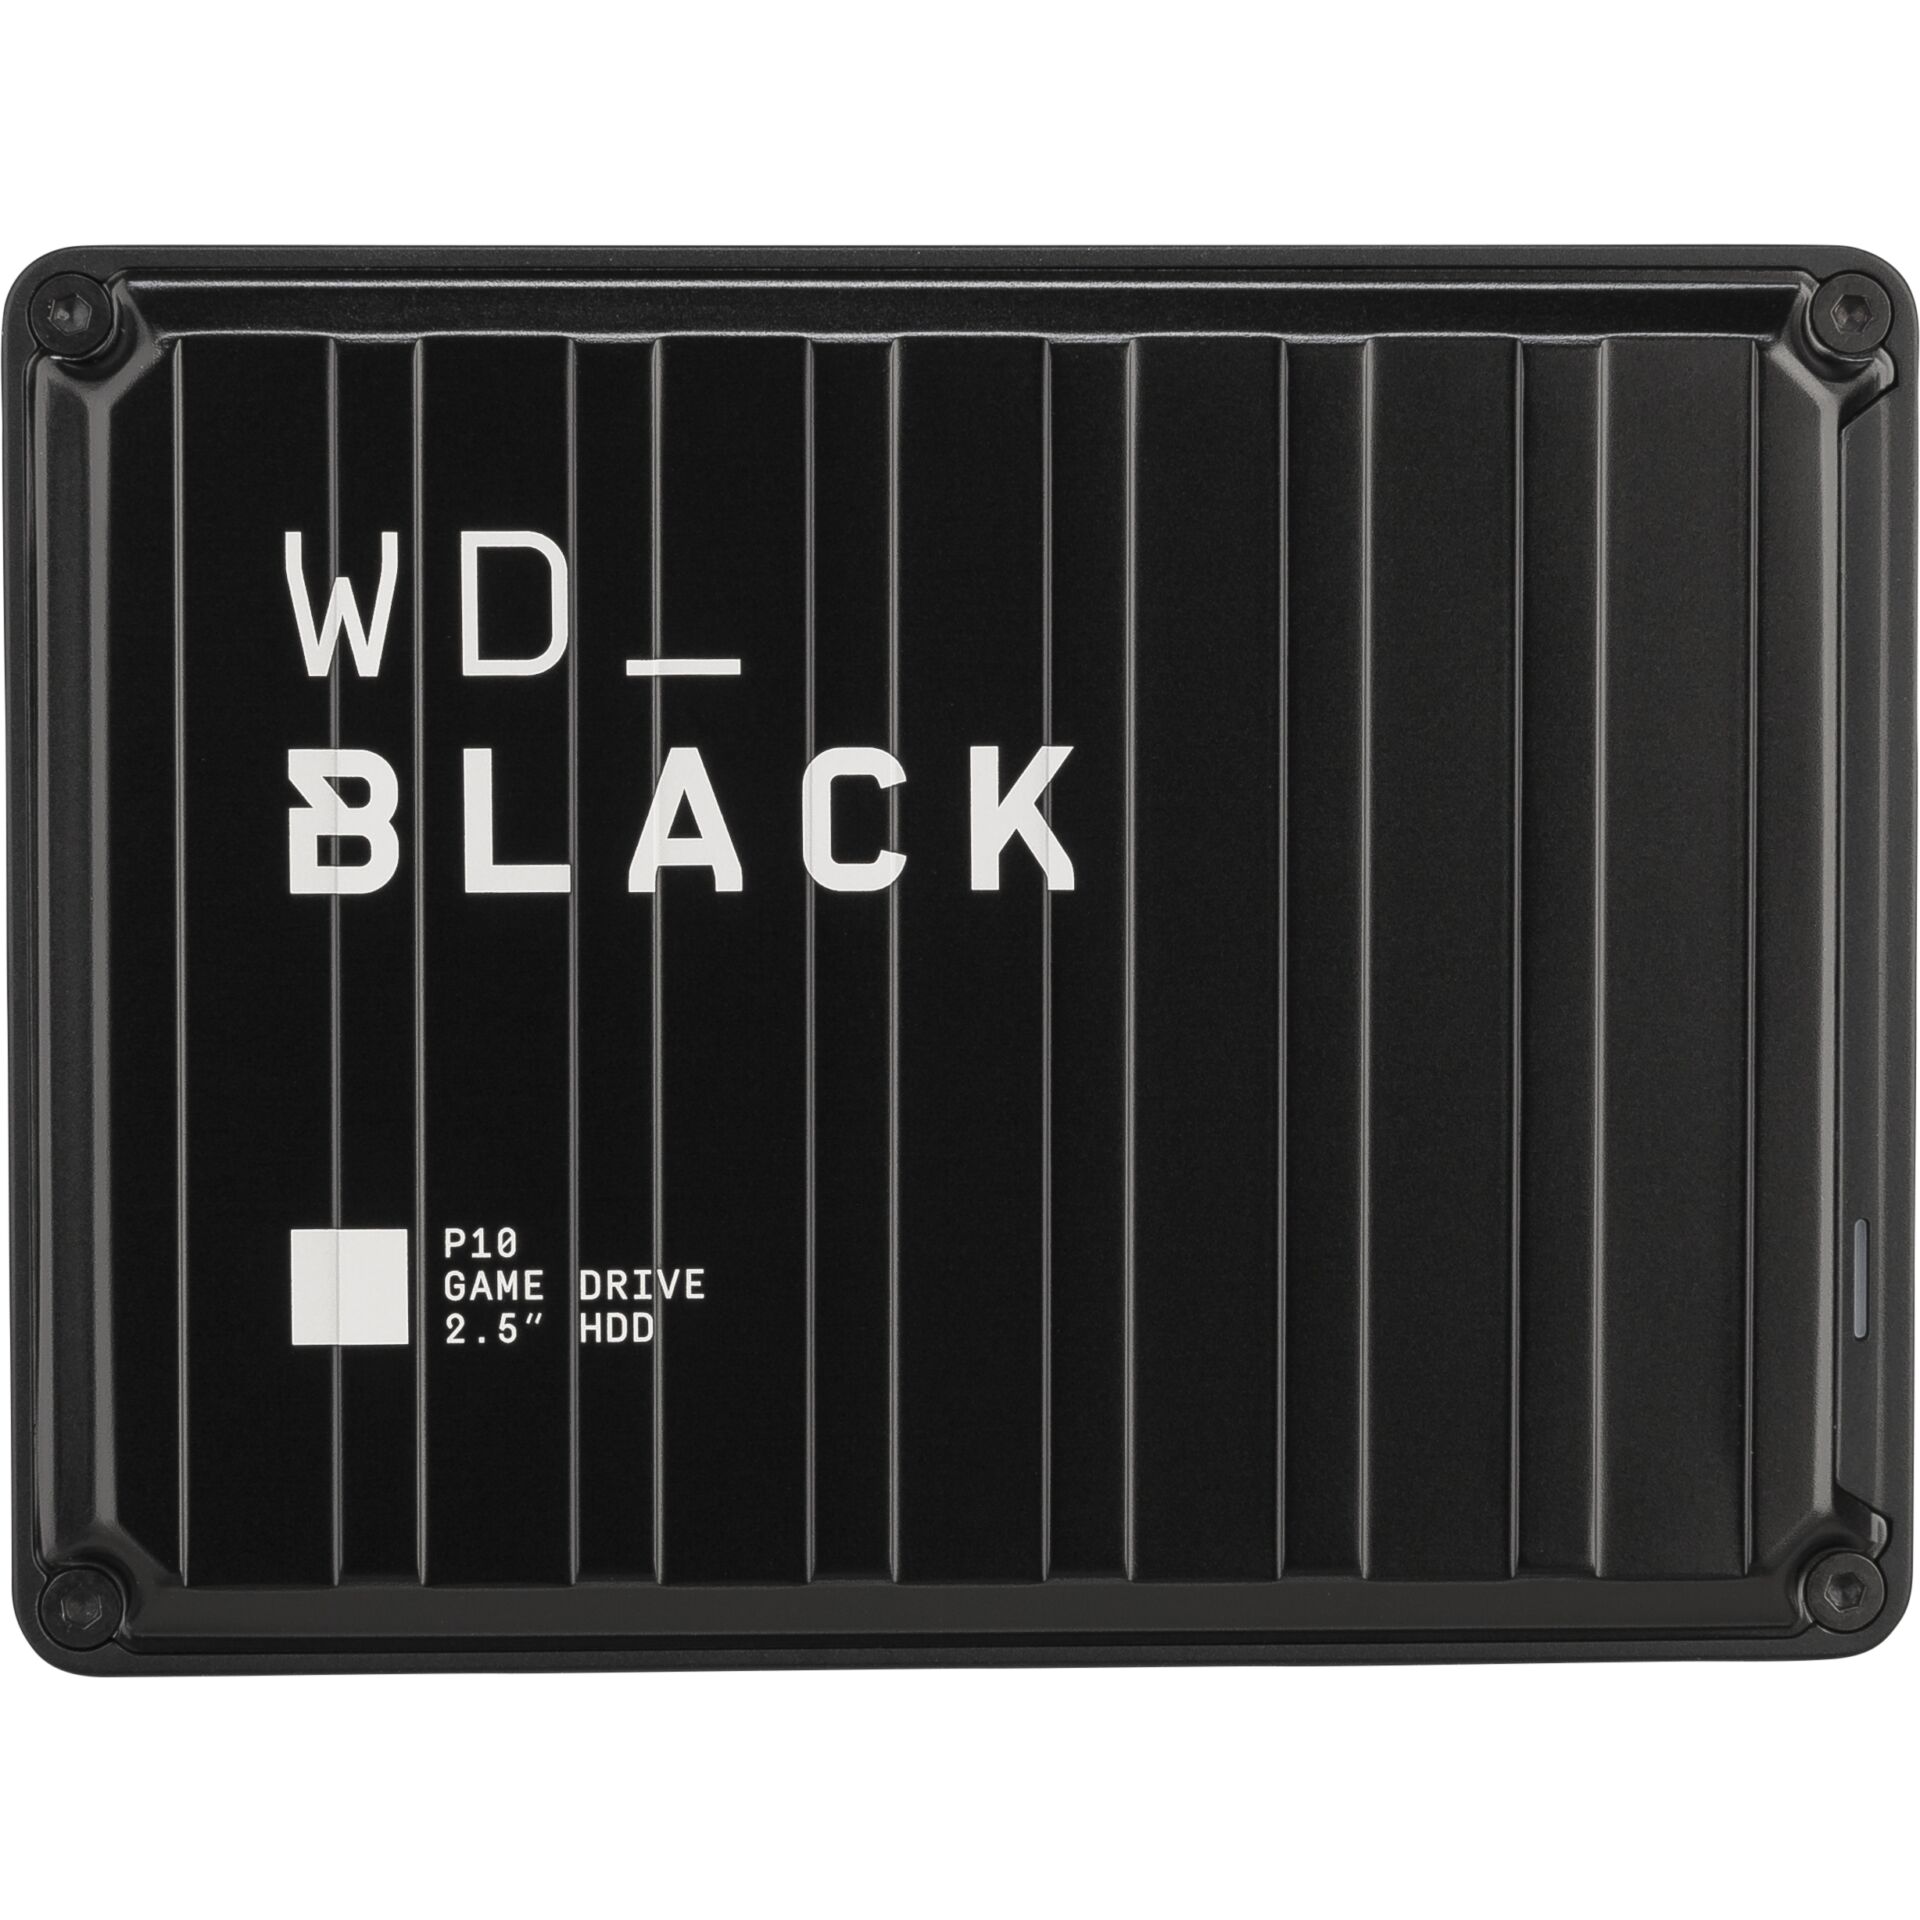 2.0 TB HDD Western Digital WD_Black P10 Game Drive, USB 3.0 